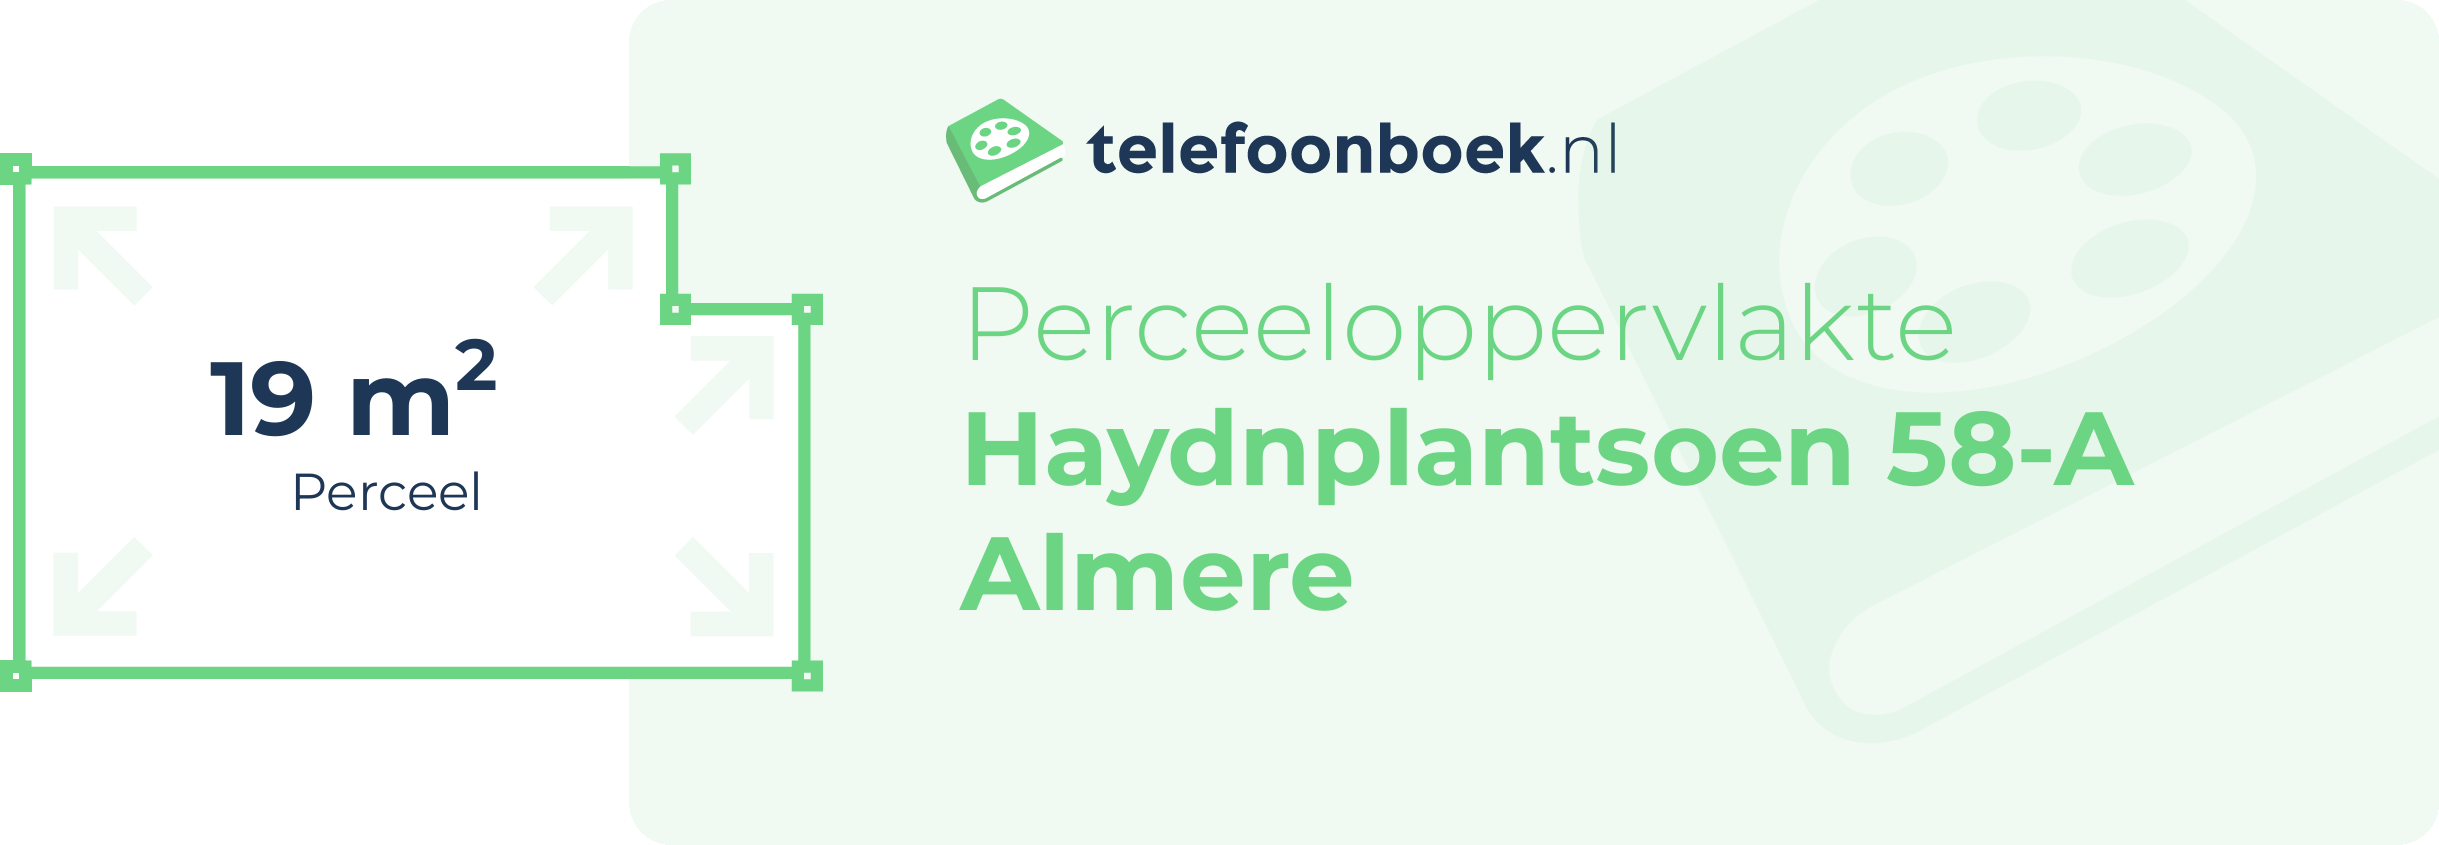 Perceeloppervlakte Haydnplantsoen 58-A Almere